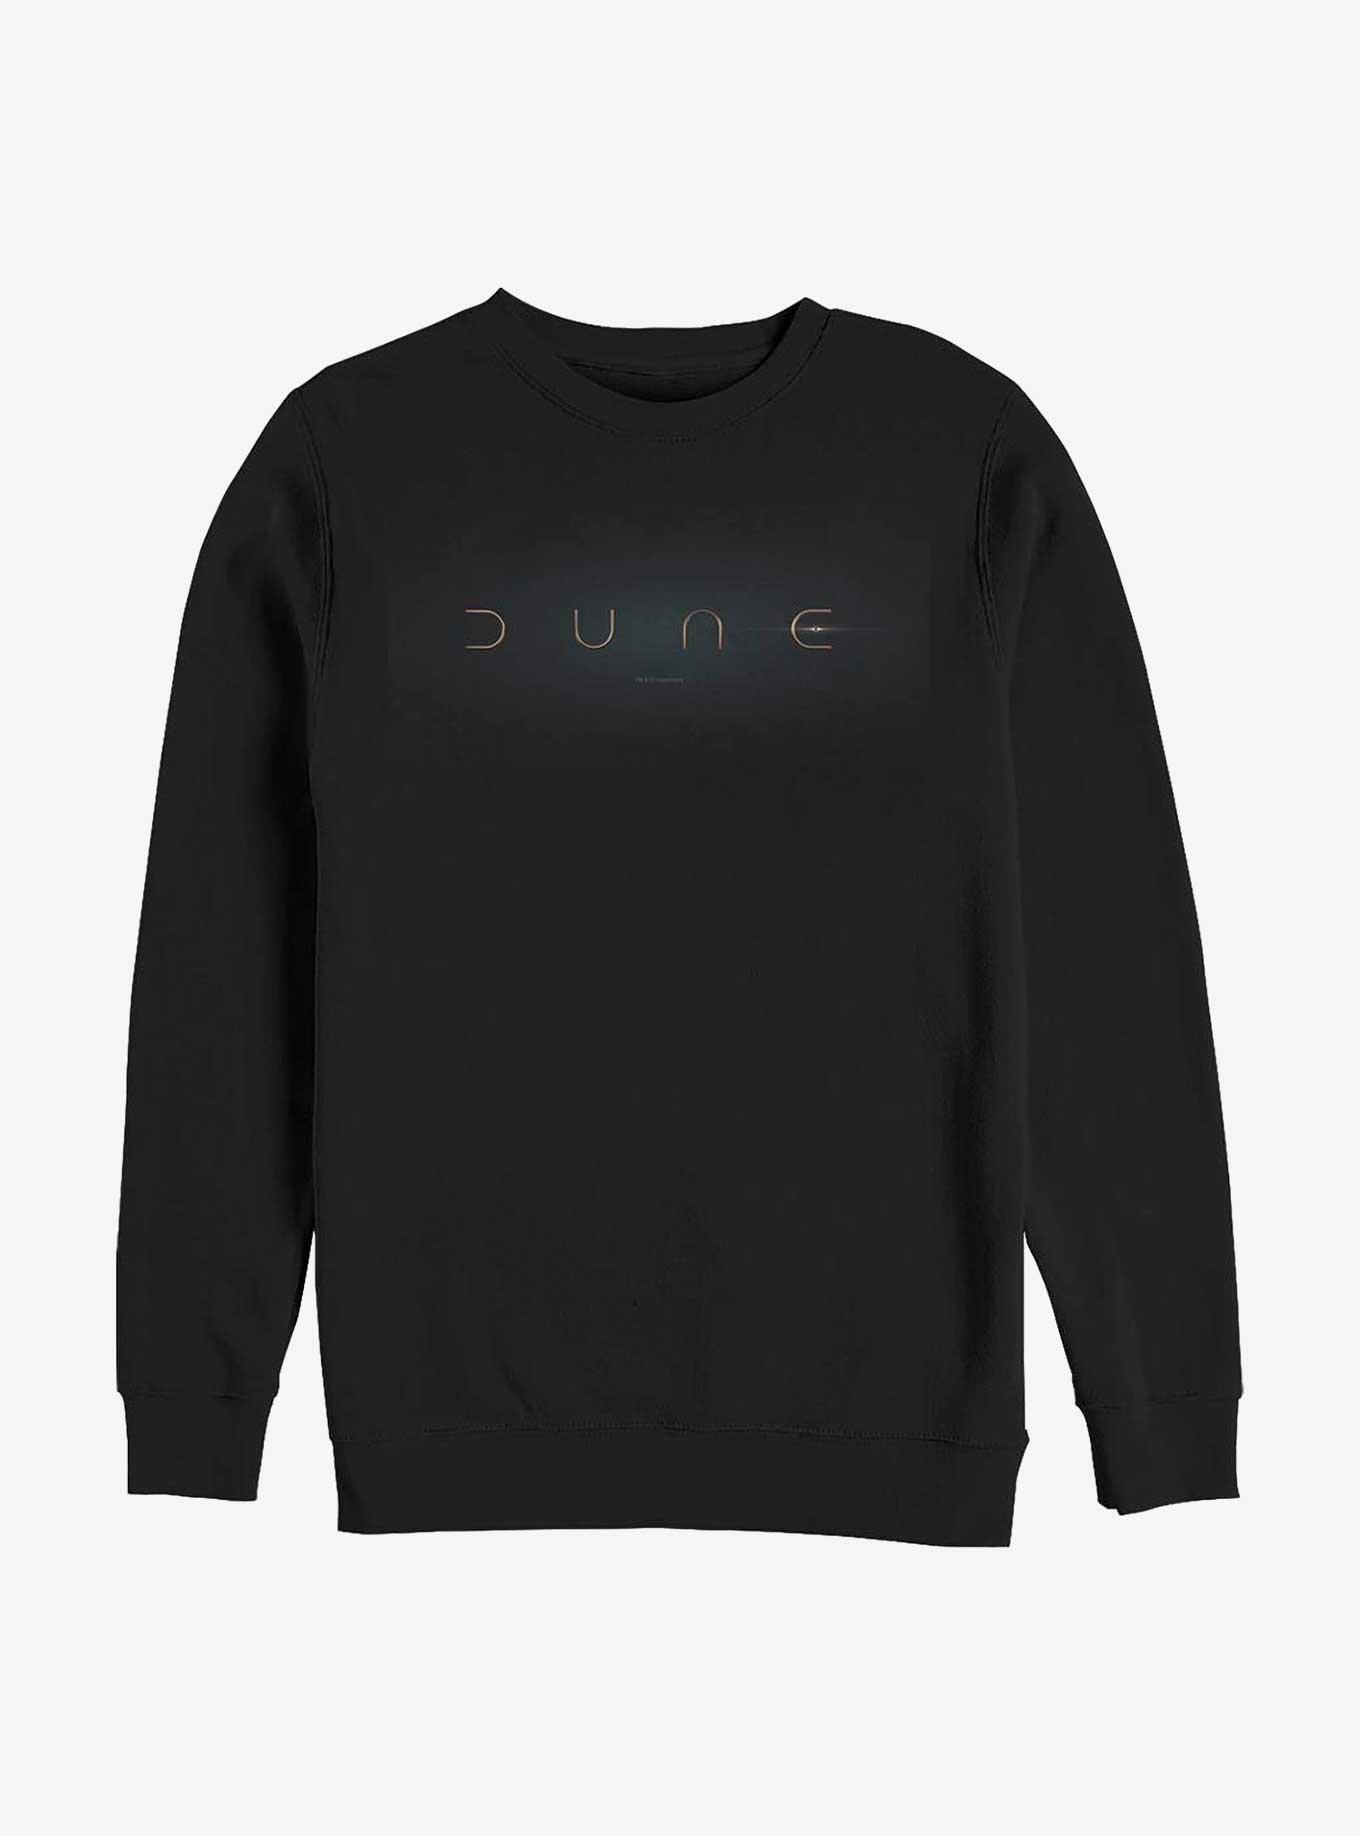 Dune Logo Sweatshirt, BLACK, hi-res